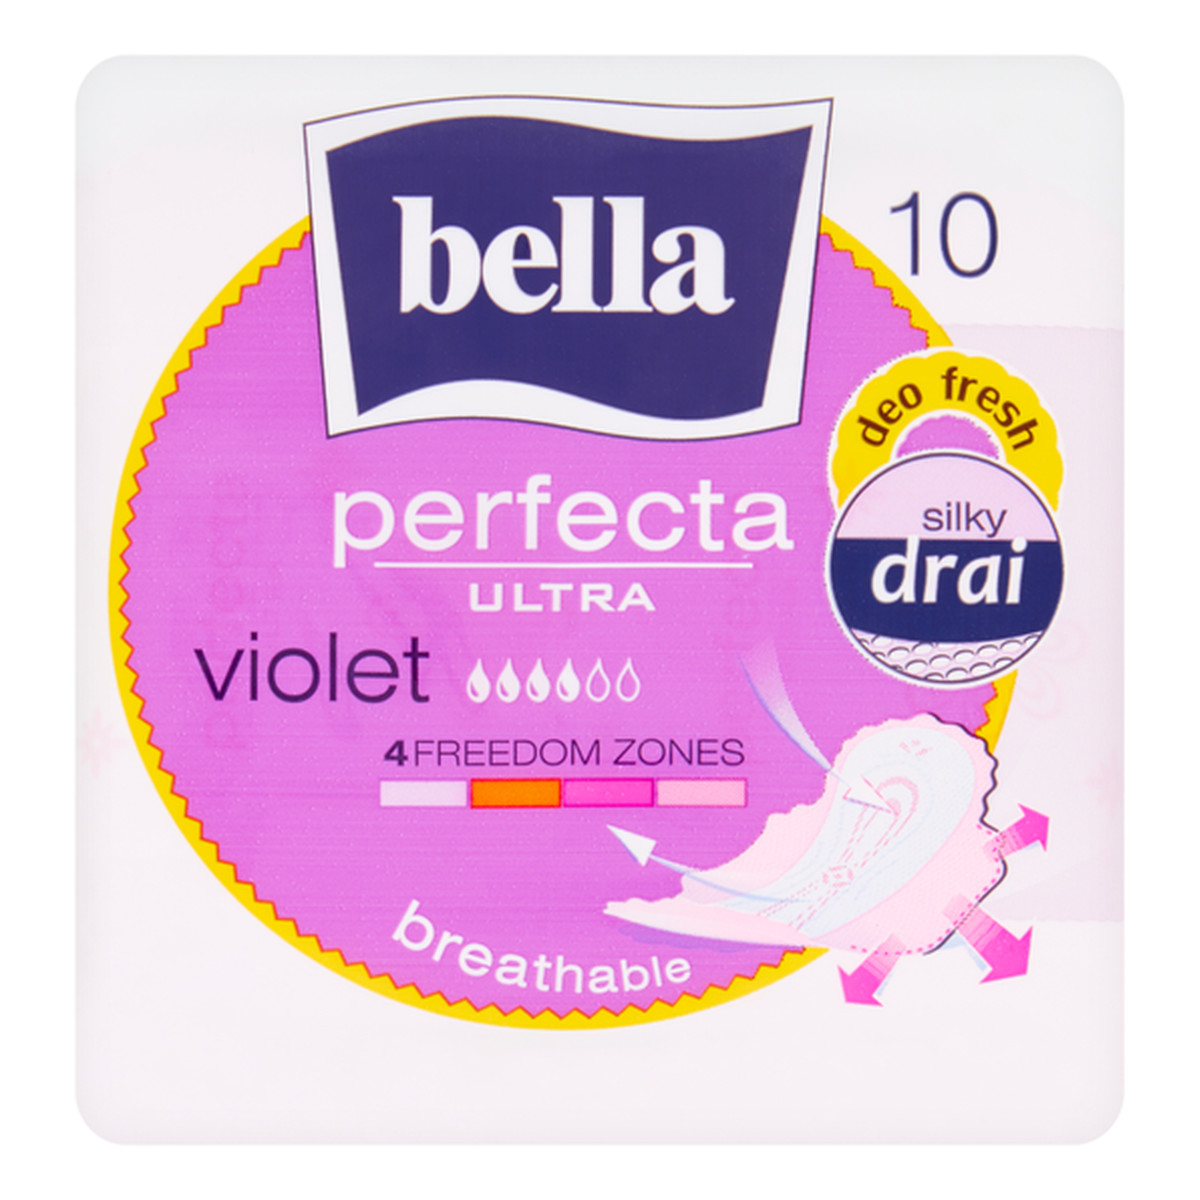 Bella Perfecta Podpaski higieniczne Ultra Violet 10 sztuk